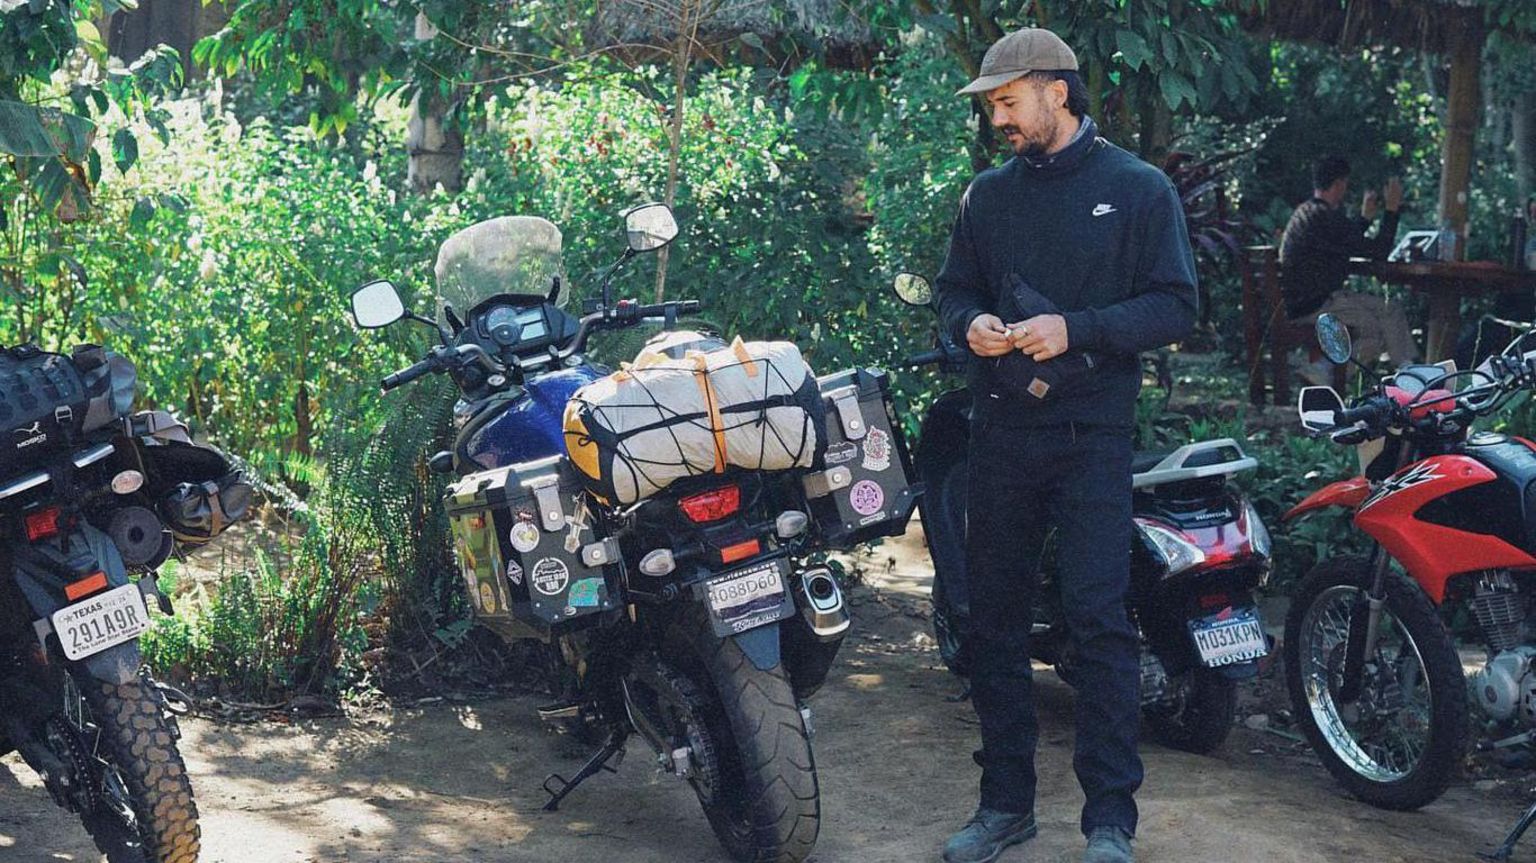 Luke Tarrant on an adventure standing by motorbikes